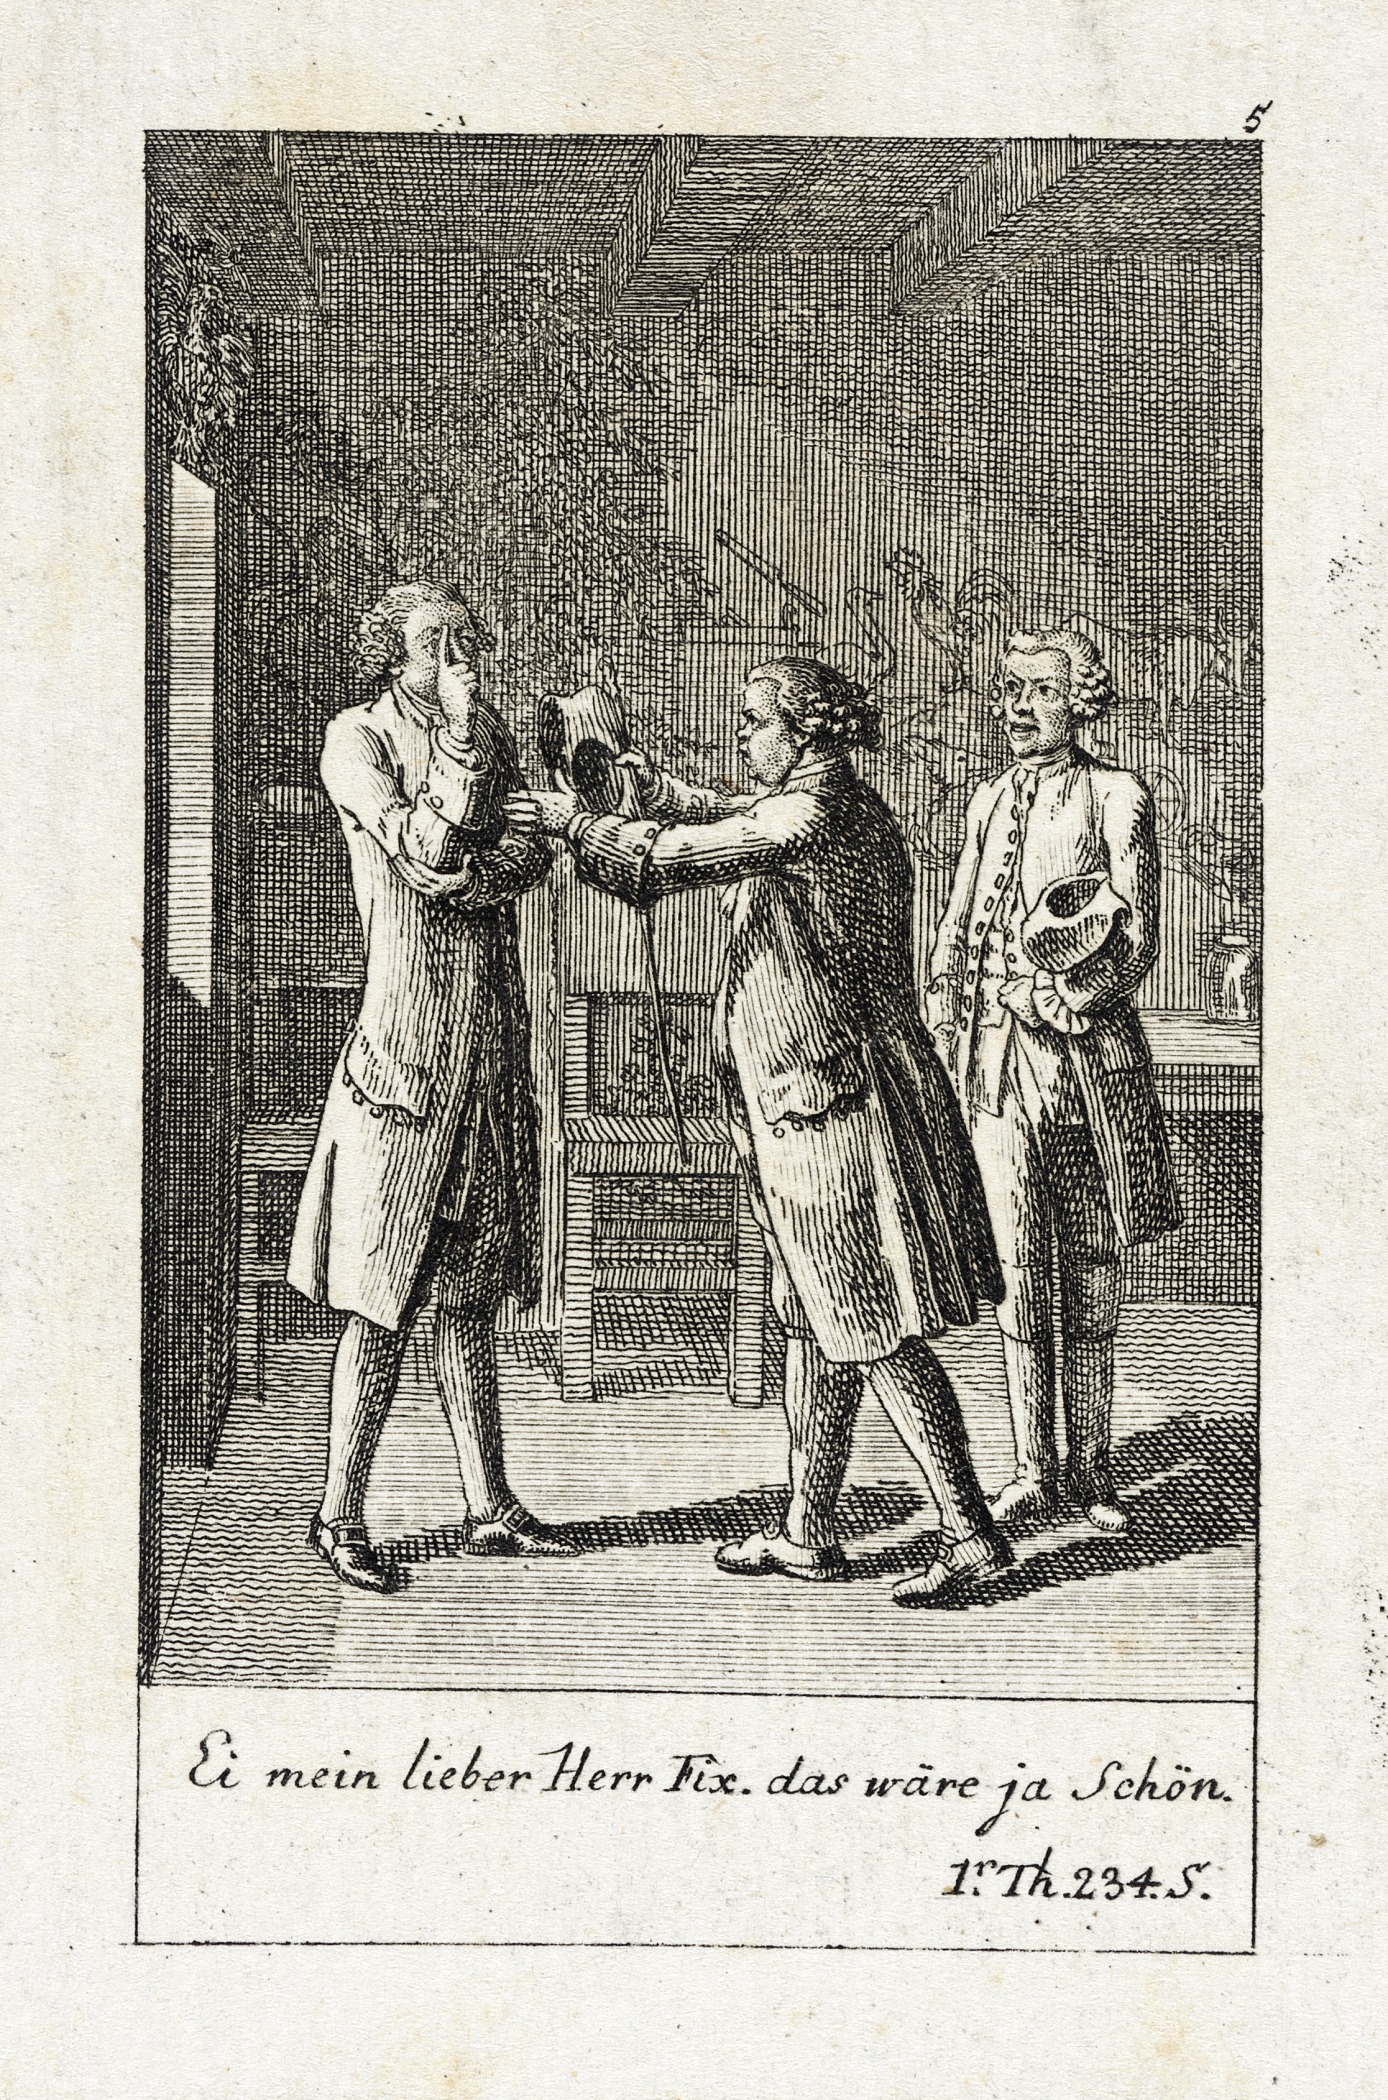 an old engraving shows three men talking